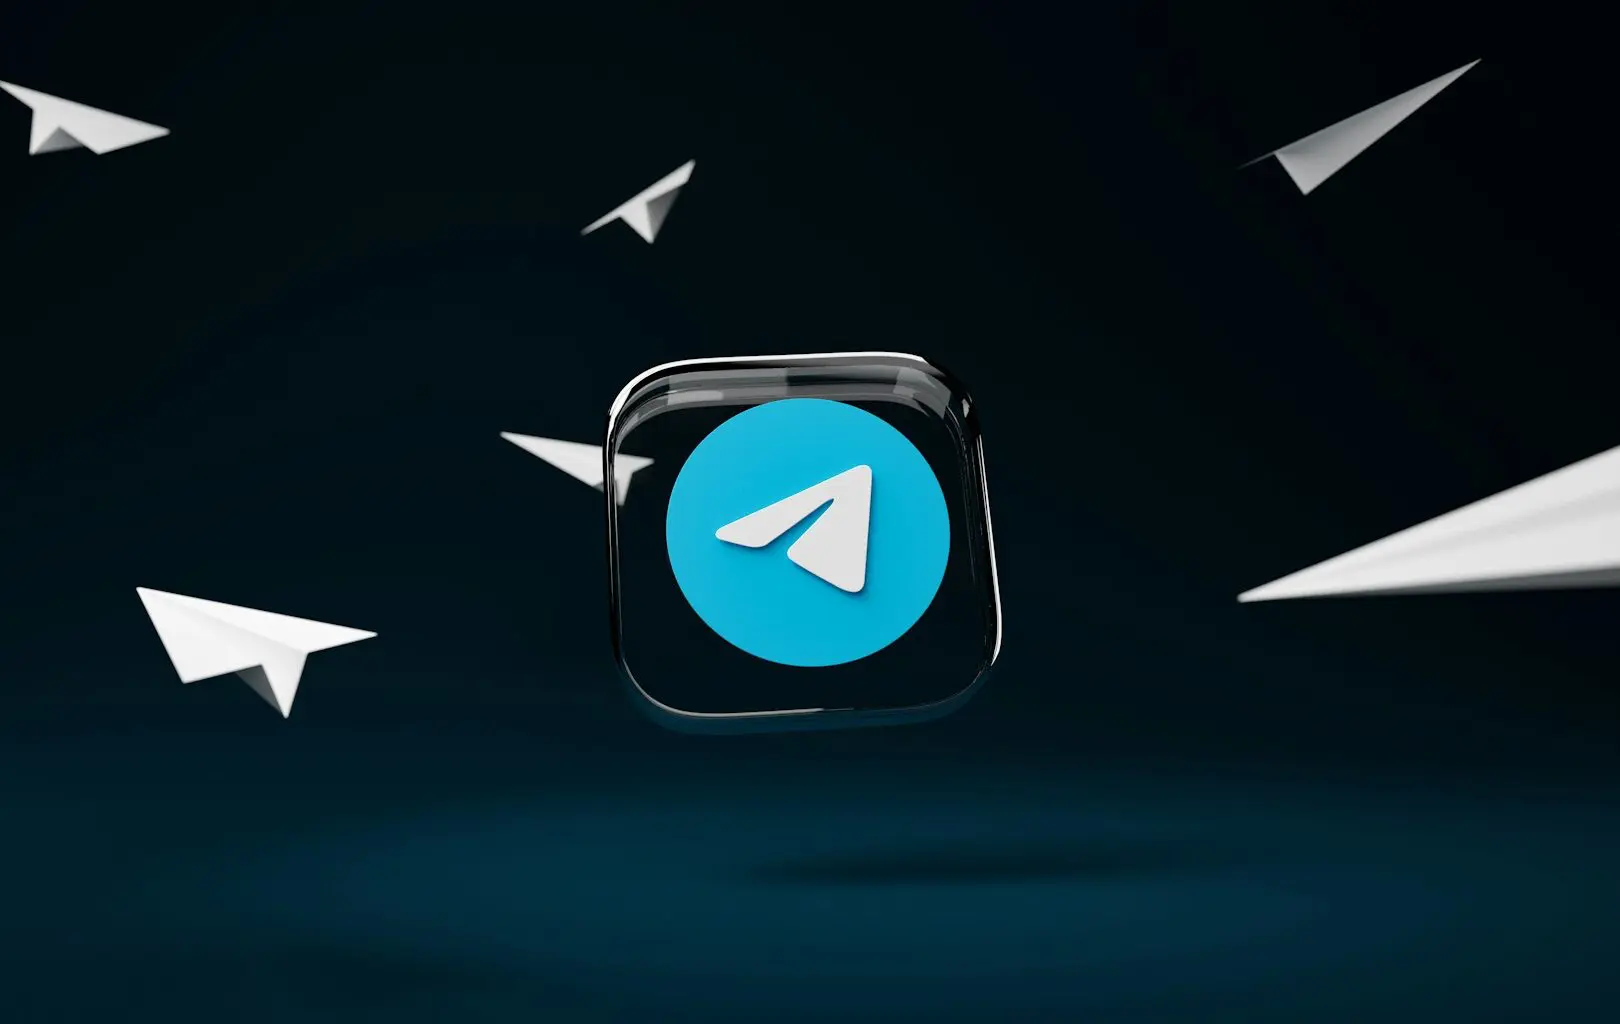 An image of the Telegram logo.